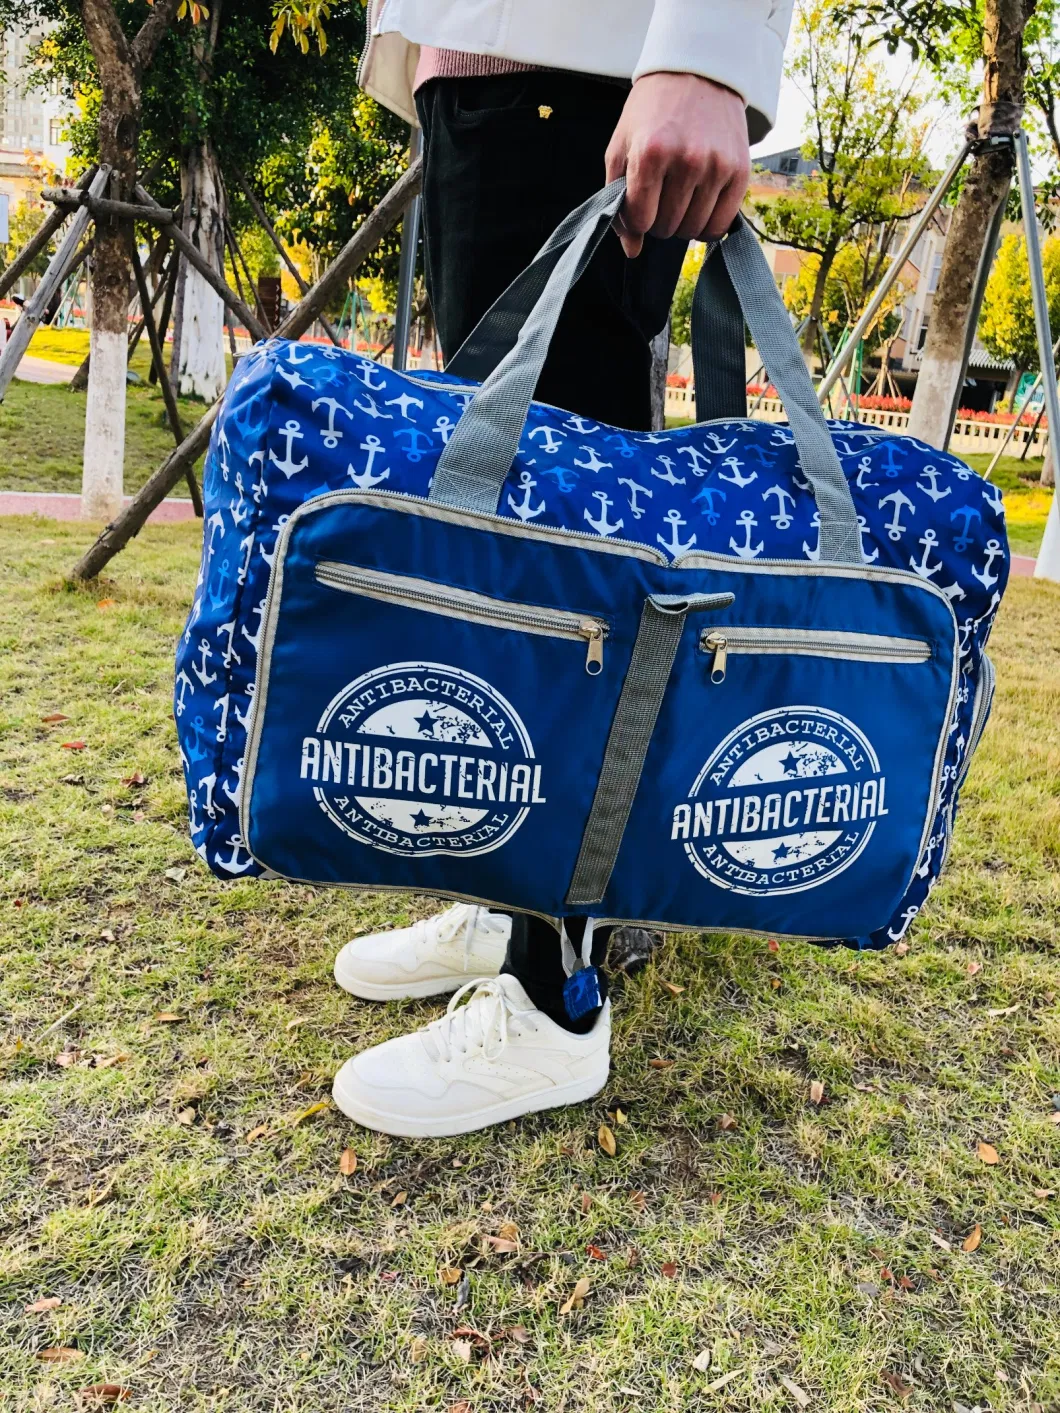 Waterproof Nylon Unisex Outdoor Travel Luggage Bag Large Capacity Portable Bag